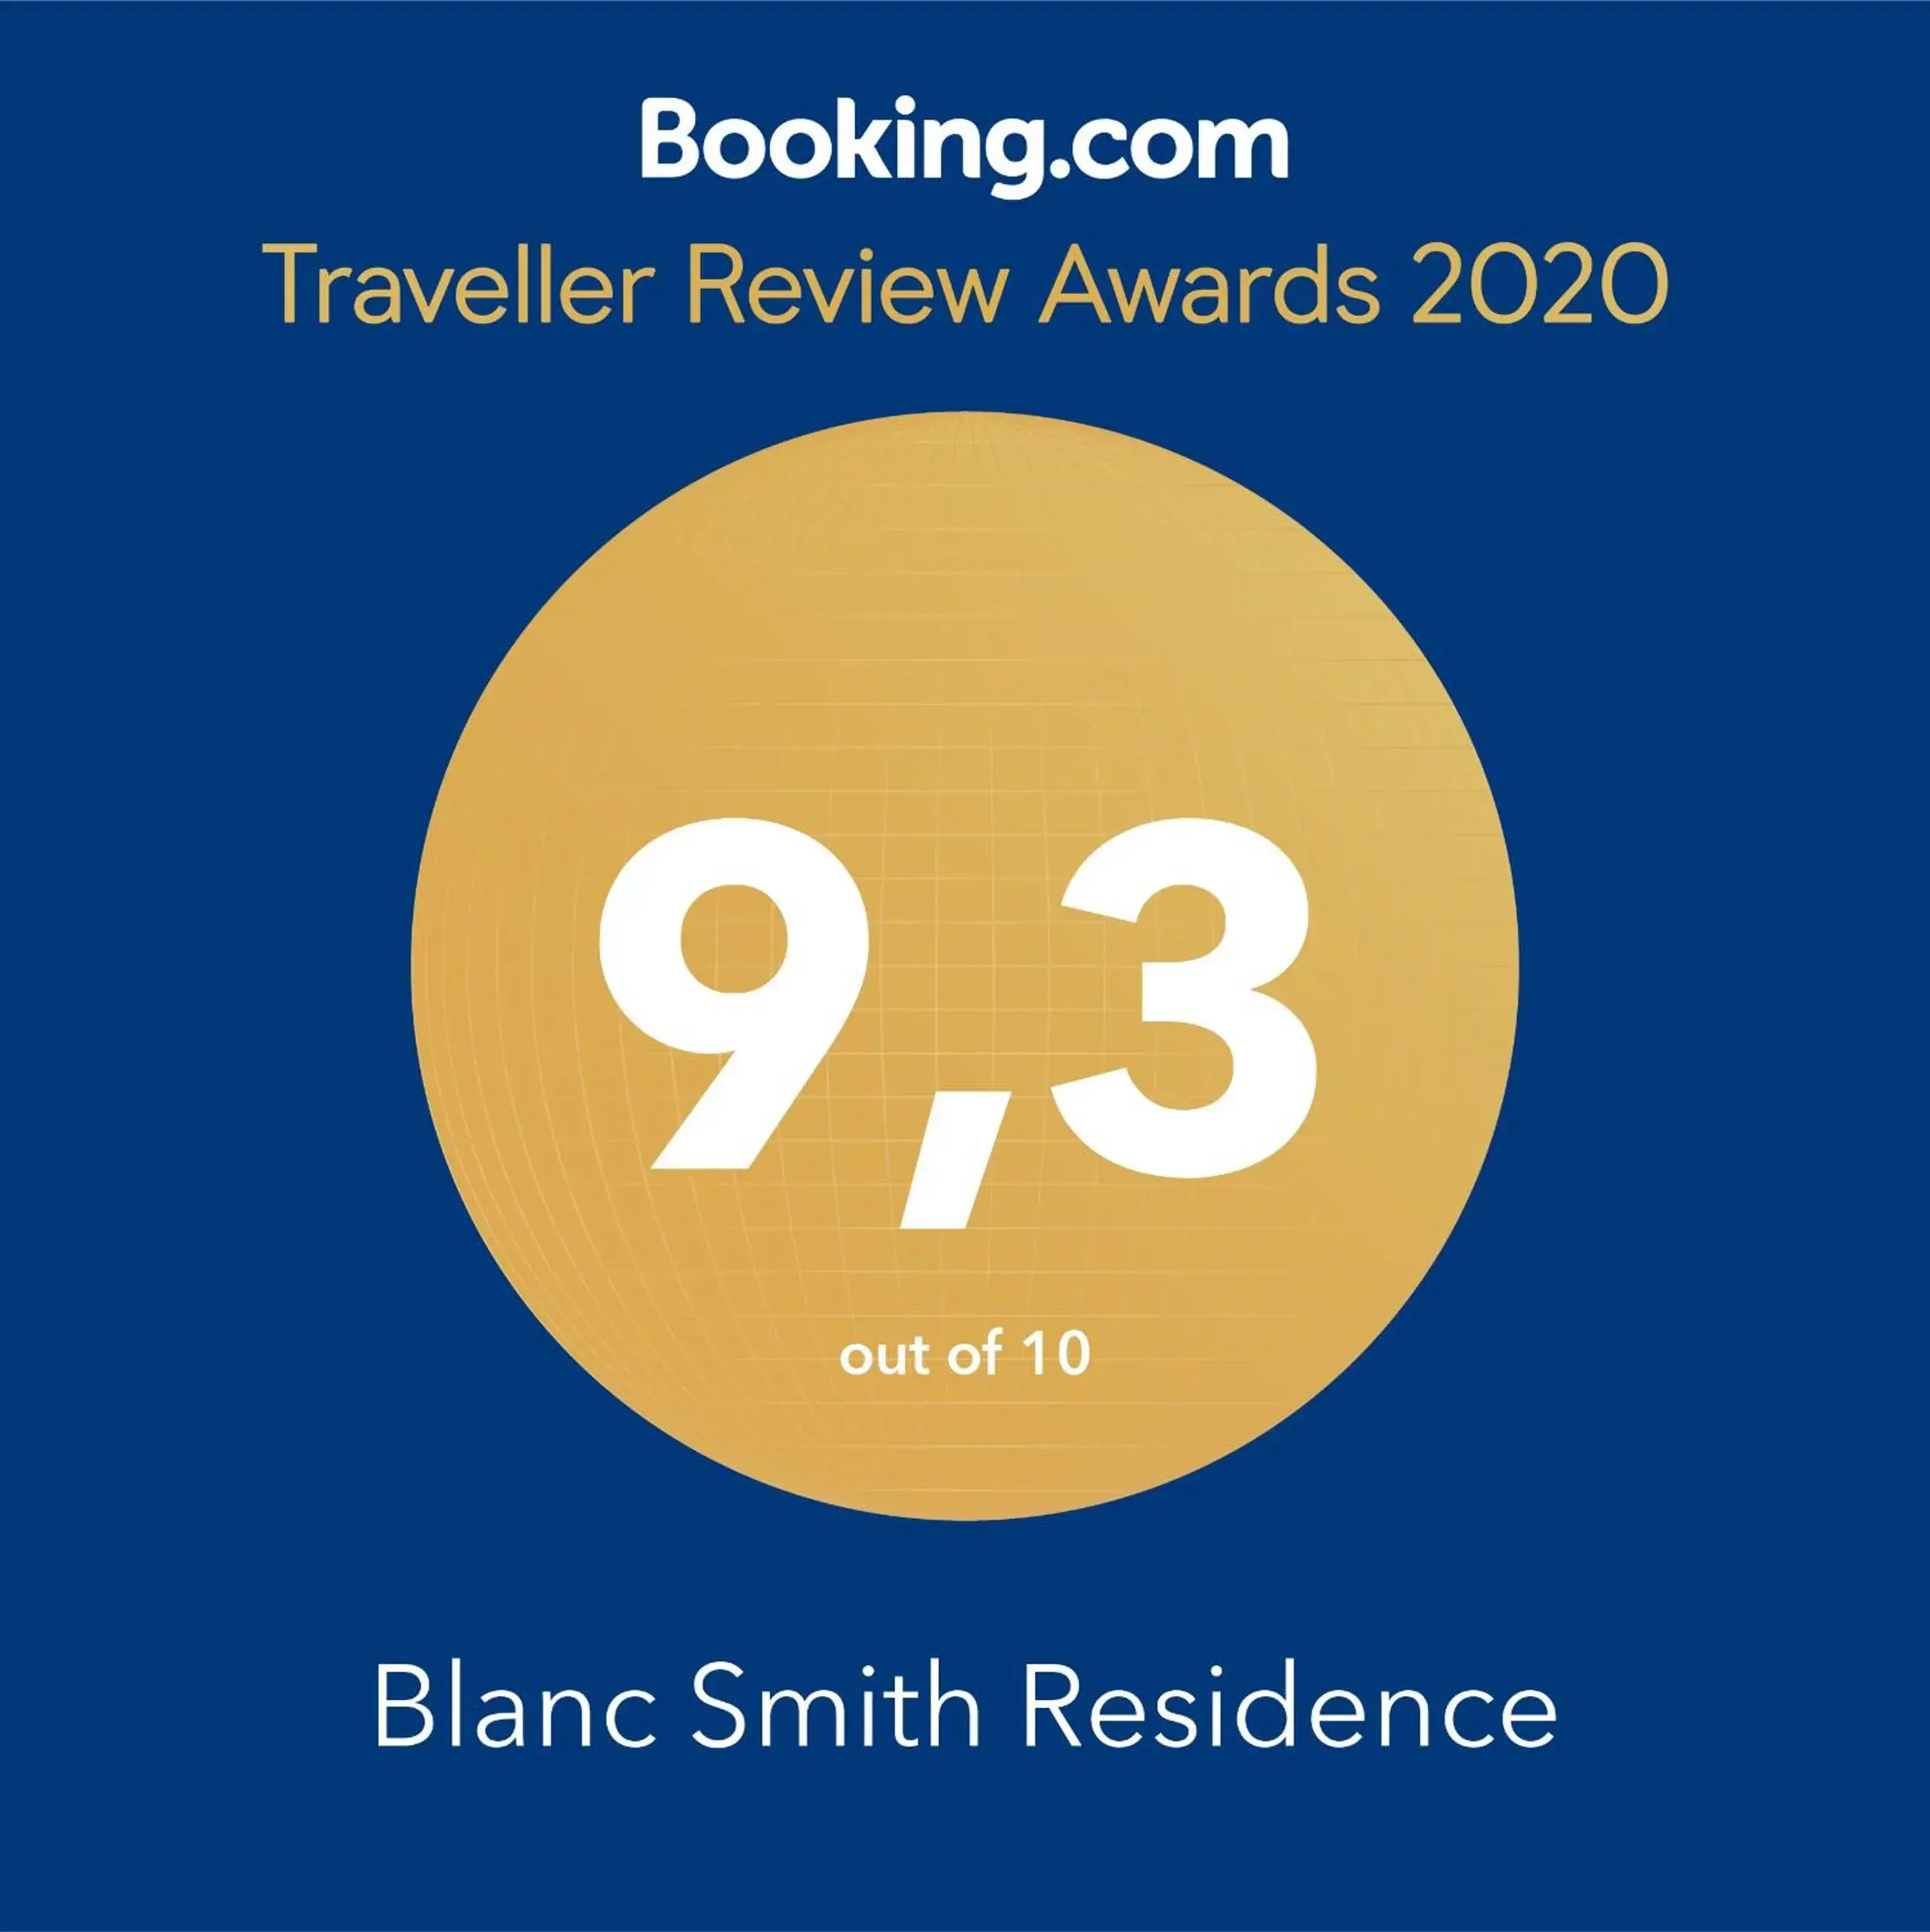 Certificate/Award in Blanc Smith Residence